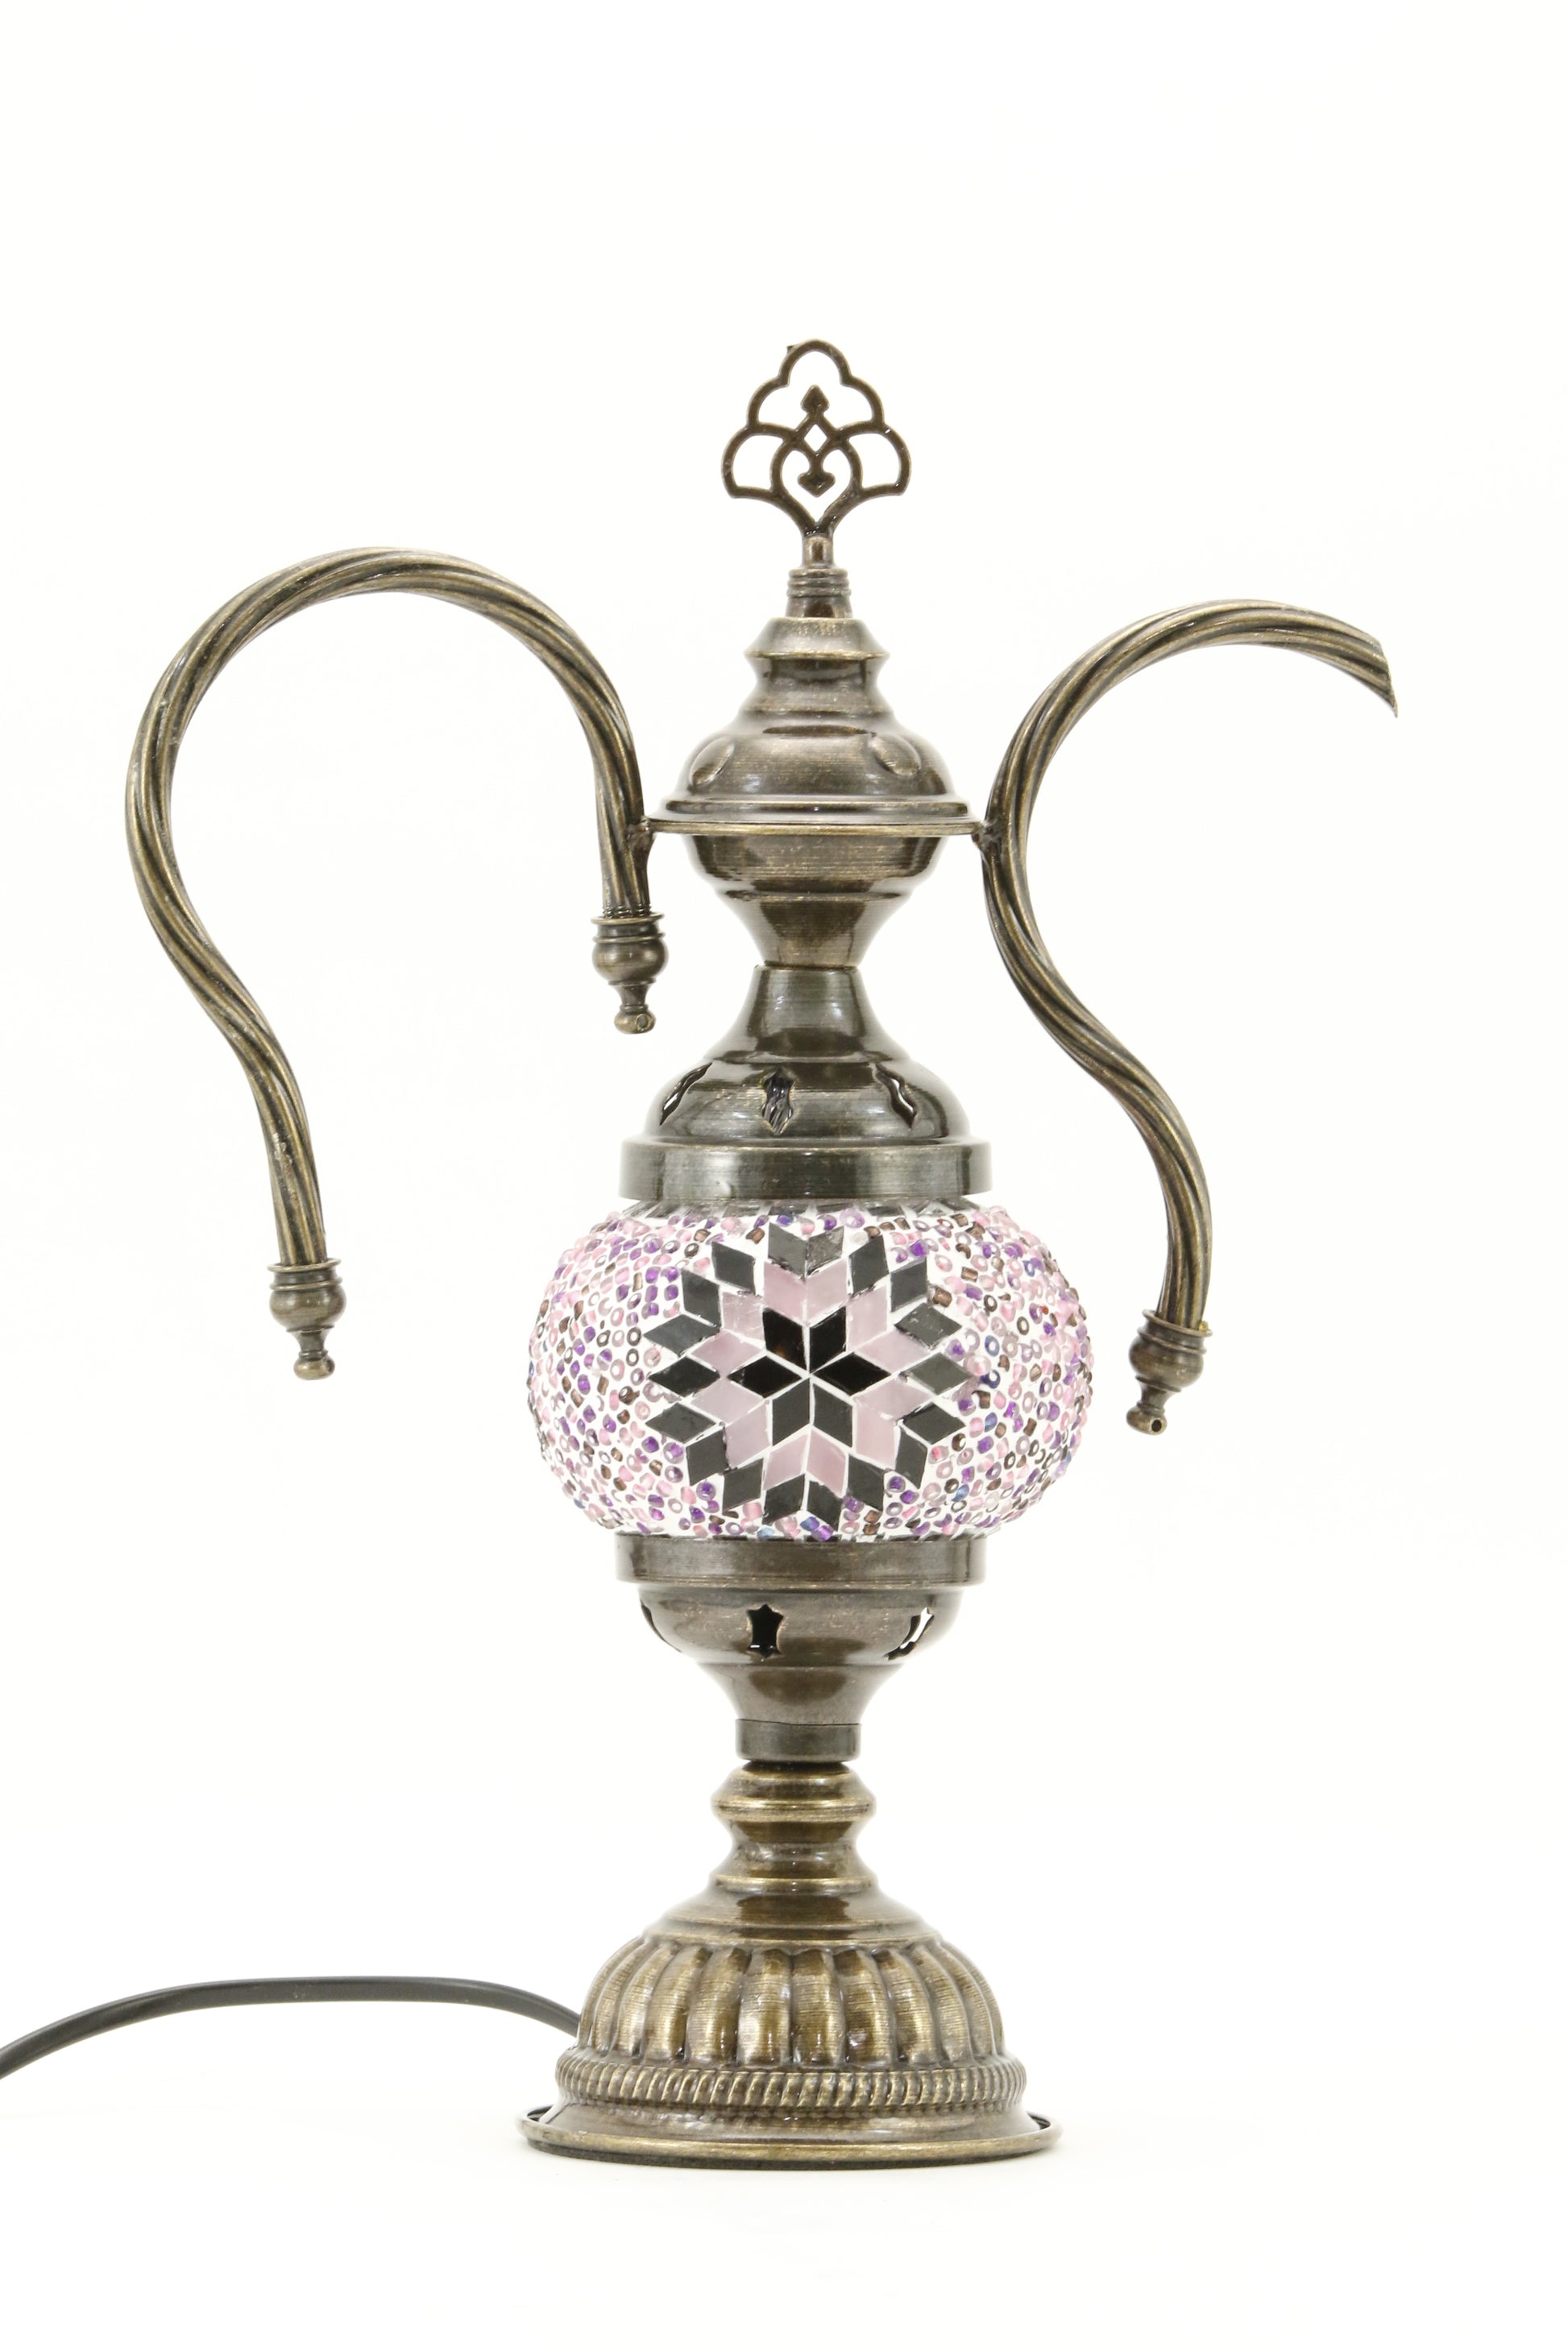 TURKISH MOSAIC GENIE BOTTLE TABLE LAMP MAUVISH PINK -TURNED OFF